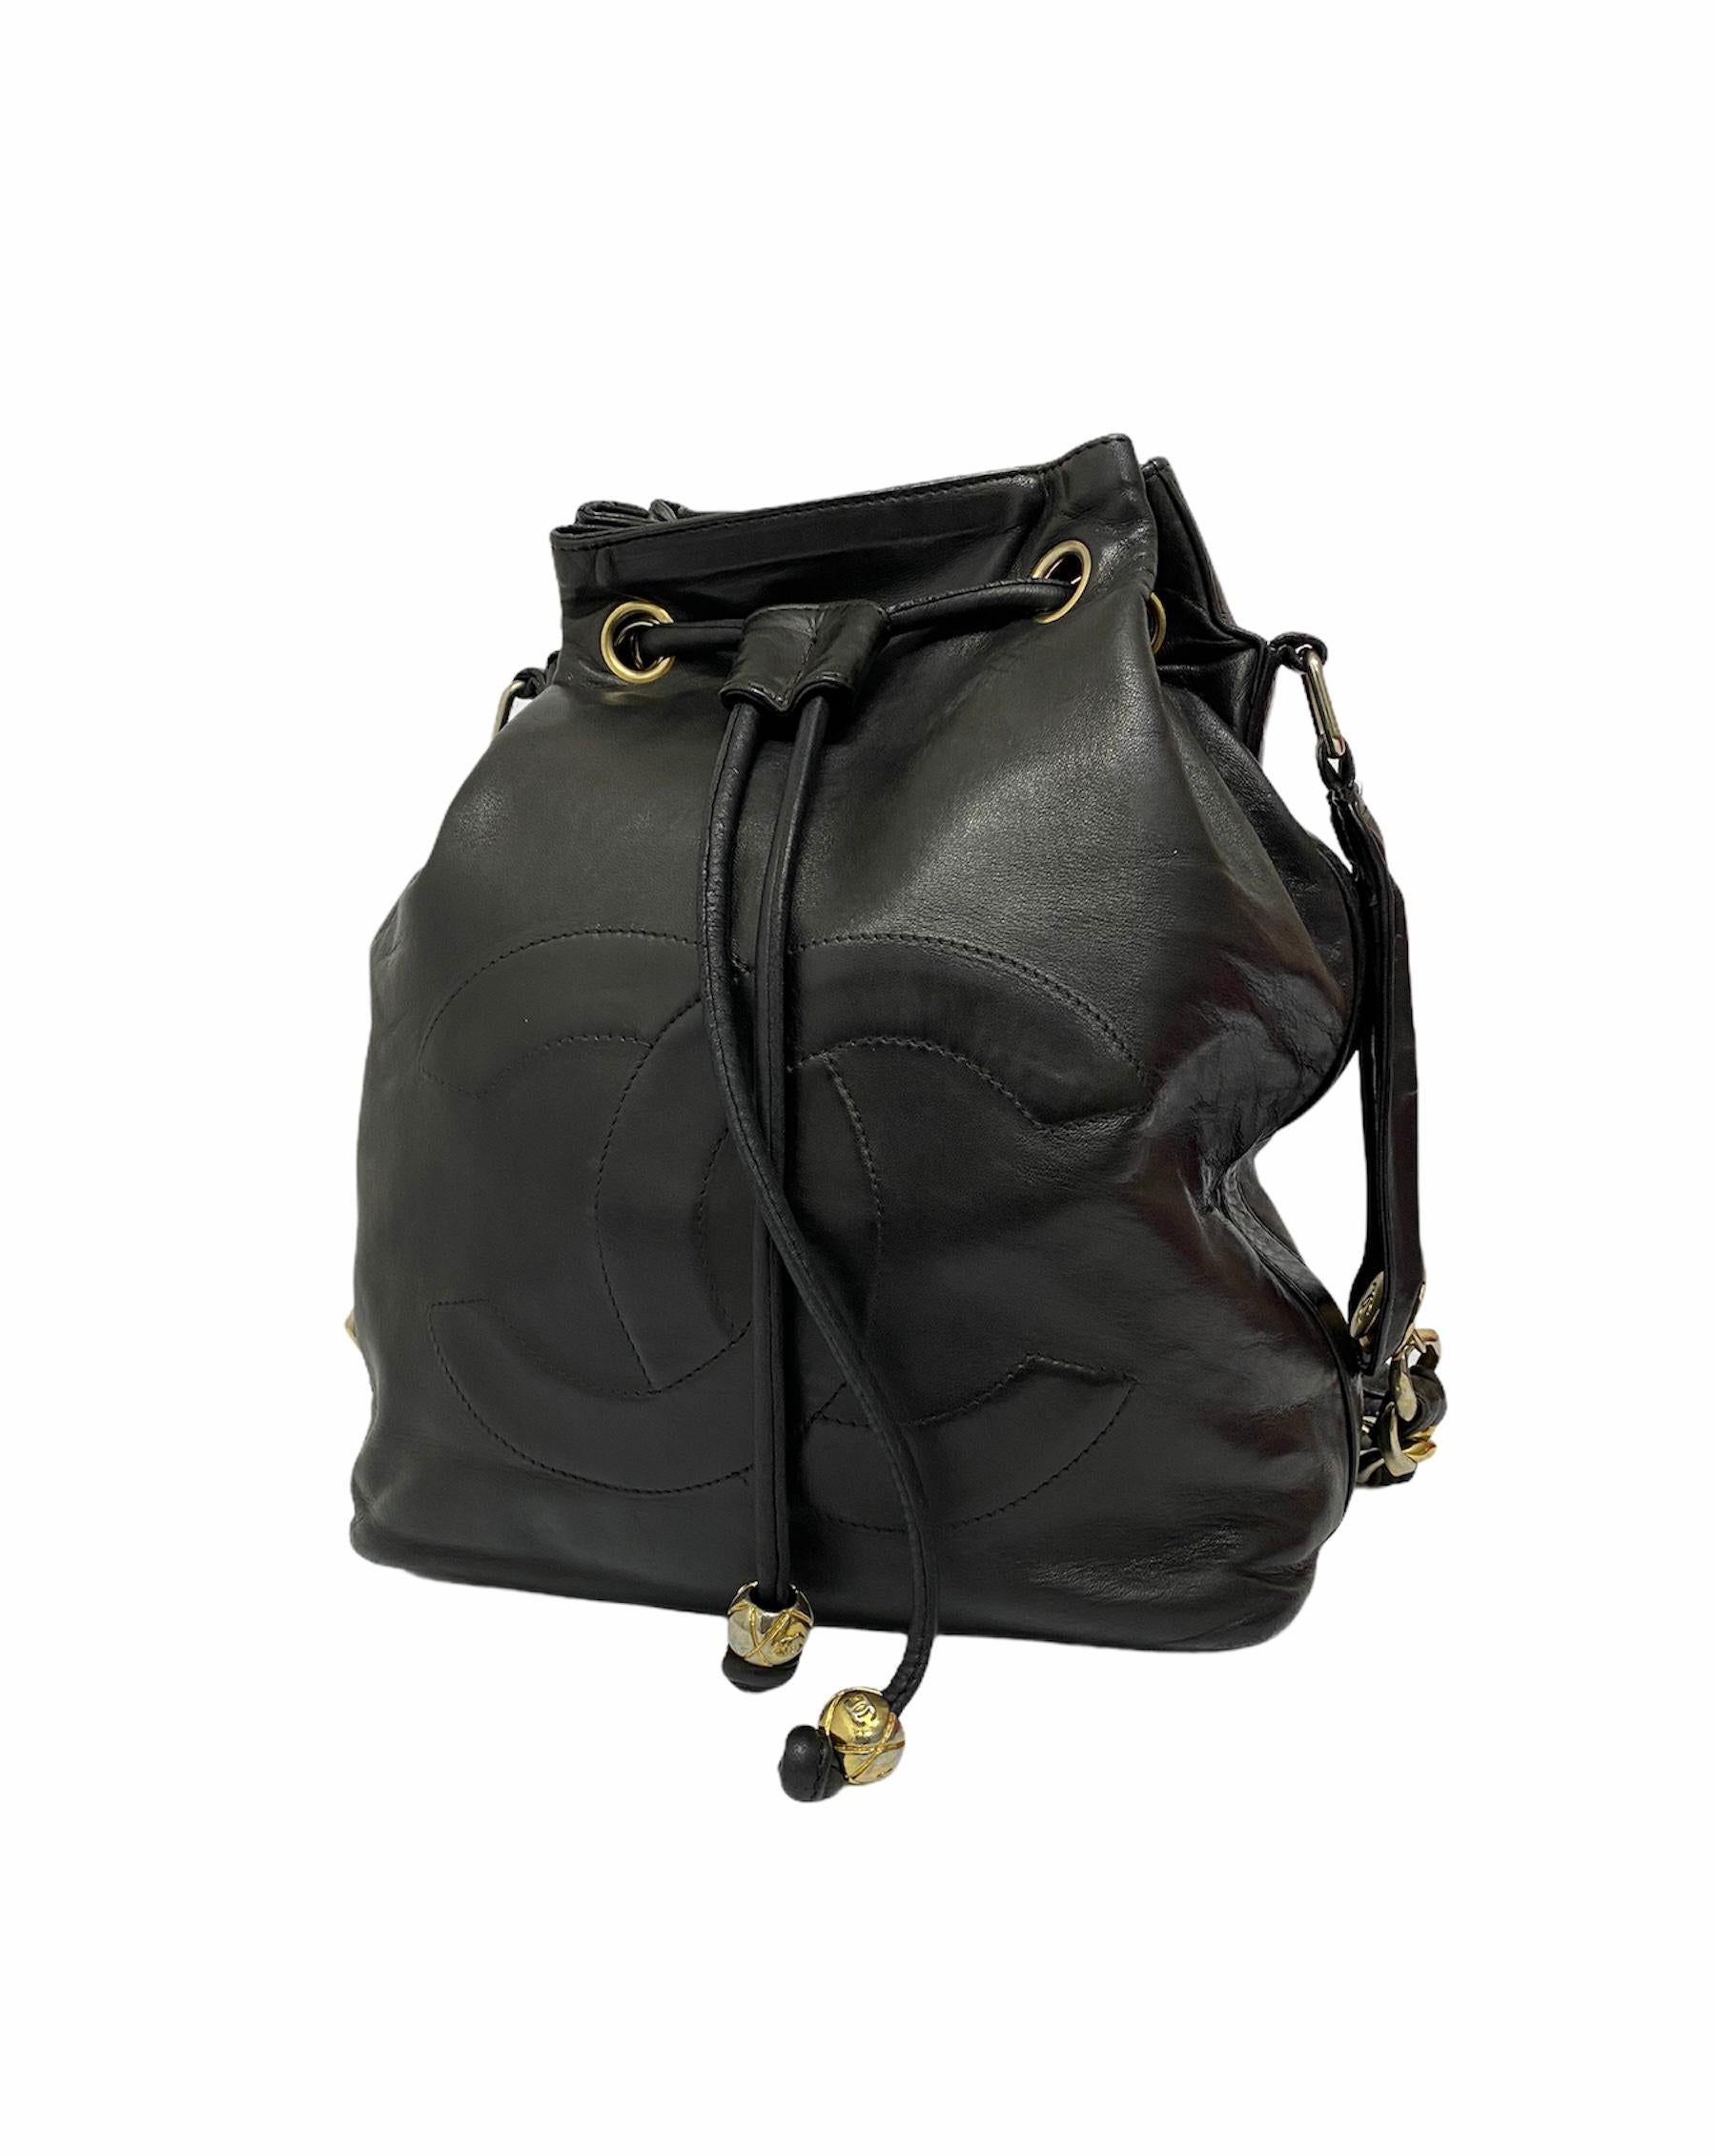 Chanel Vintage Bucket Bag in Black Leather with Golden Hardware 2